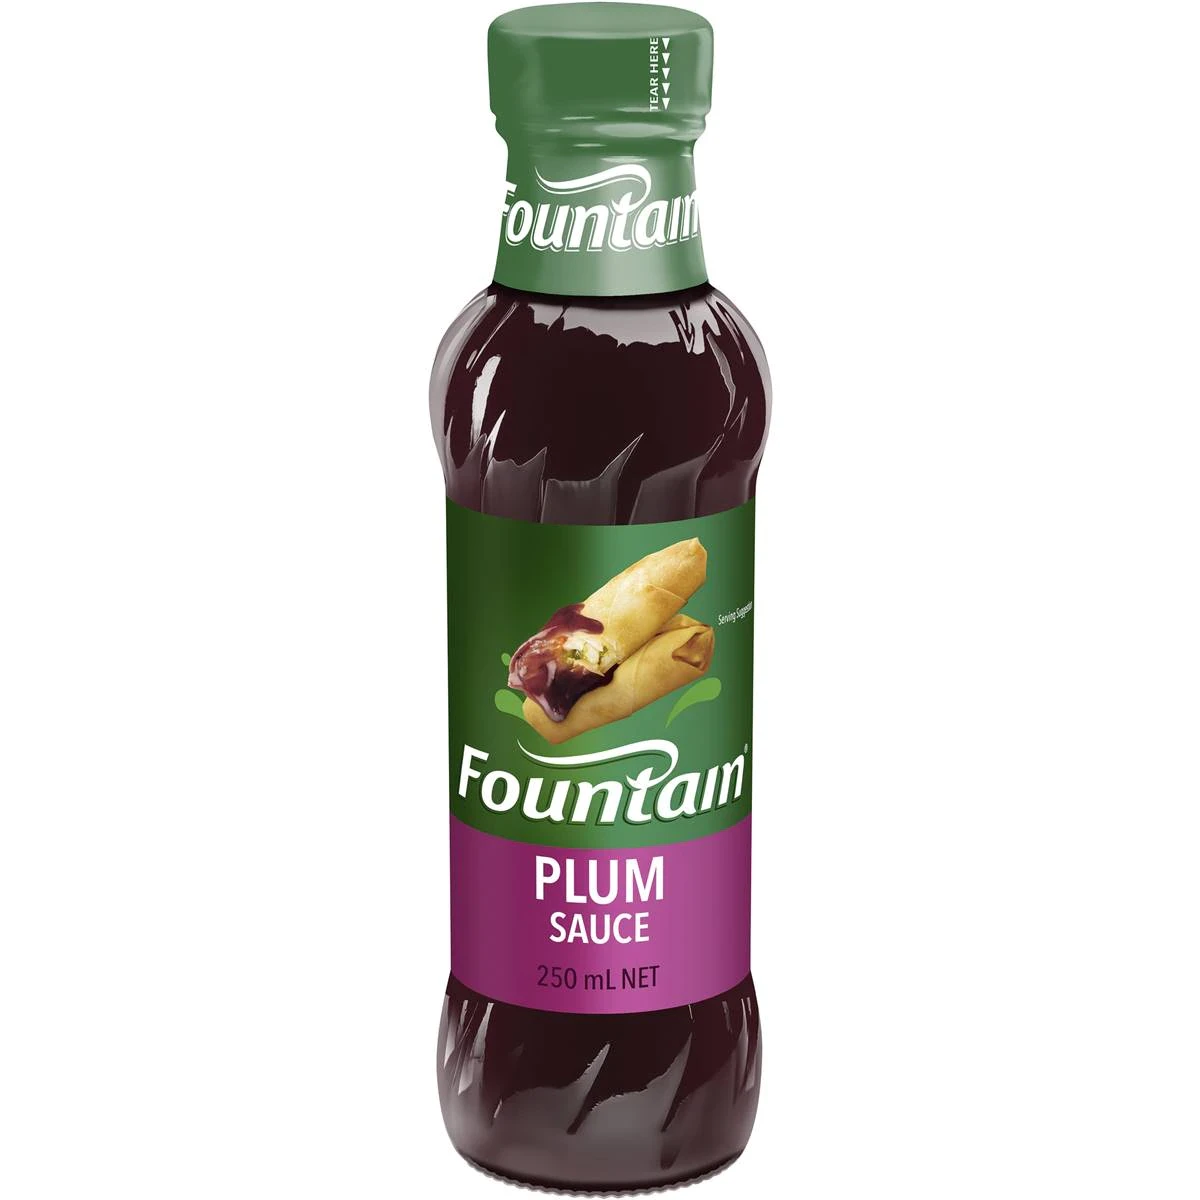 Fountain plum sauce 250ml